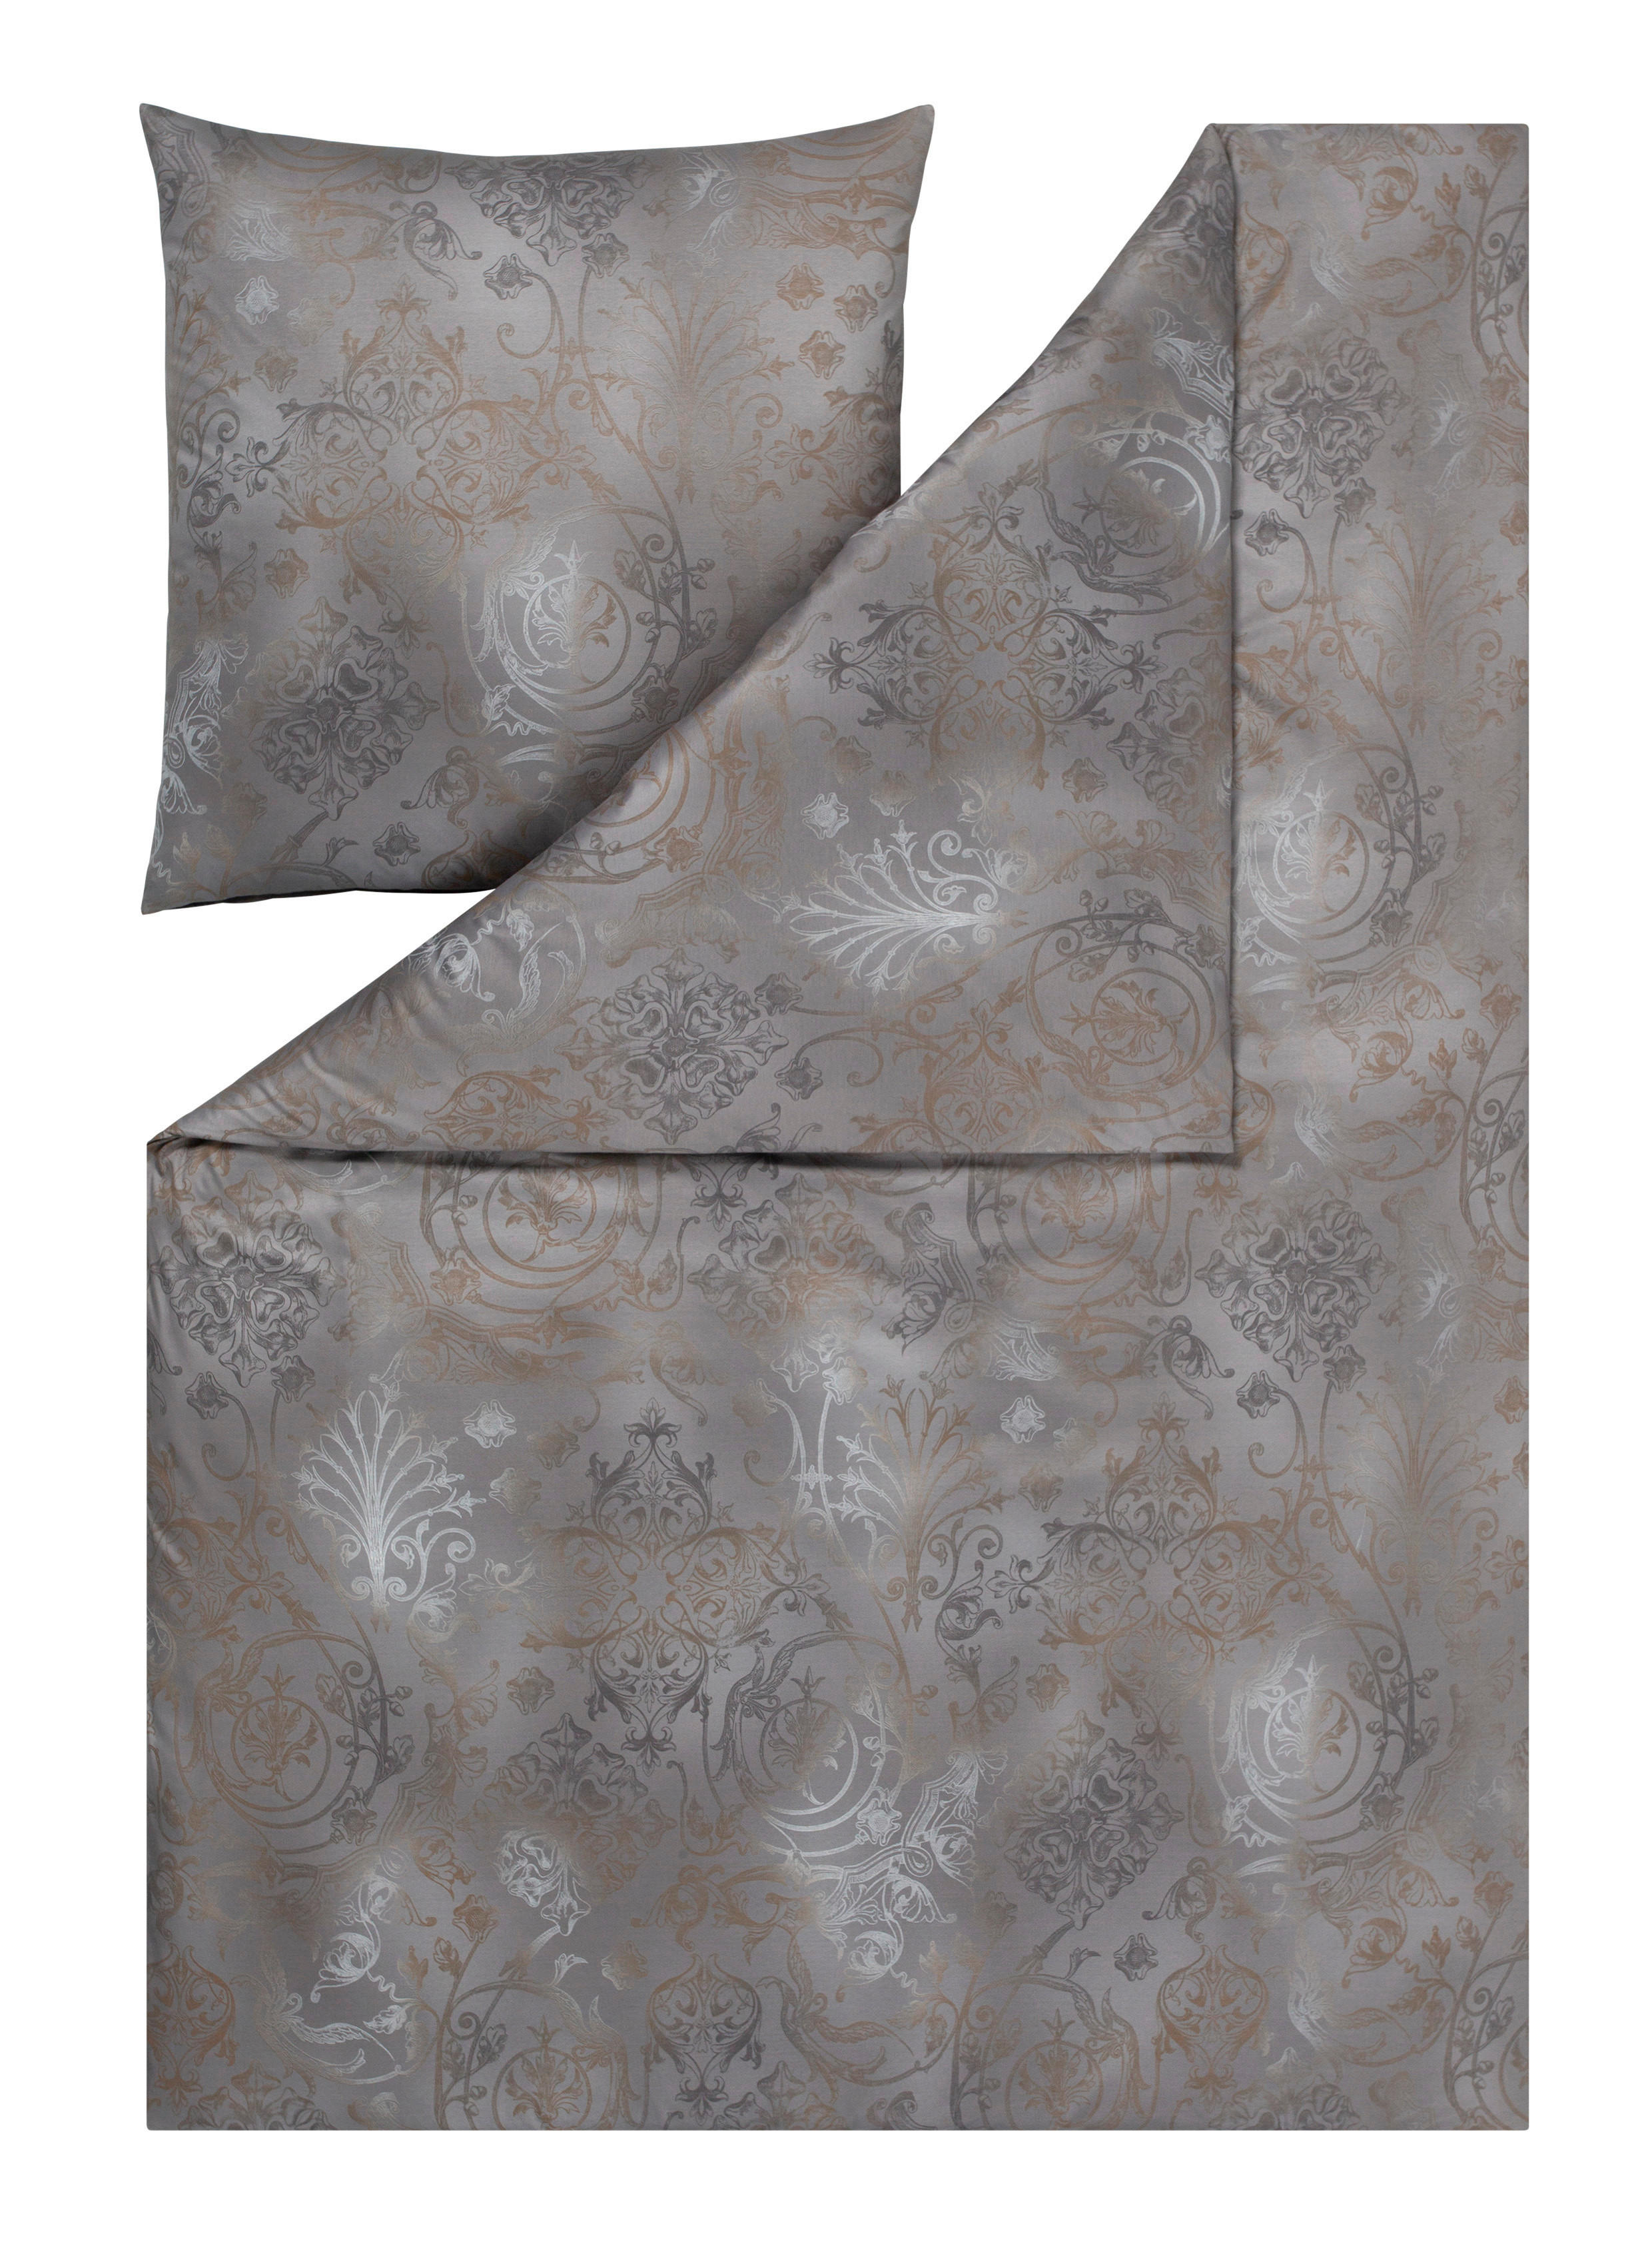 BETTWÄSCHE 135/200 cm  - Grau, Design, Textil (135/200cm) - Estella